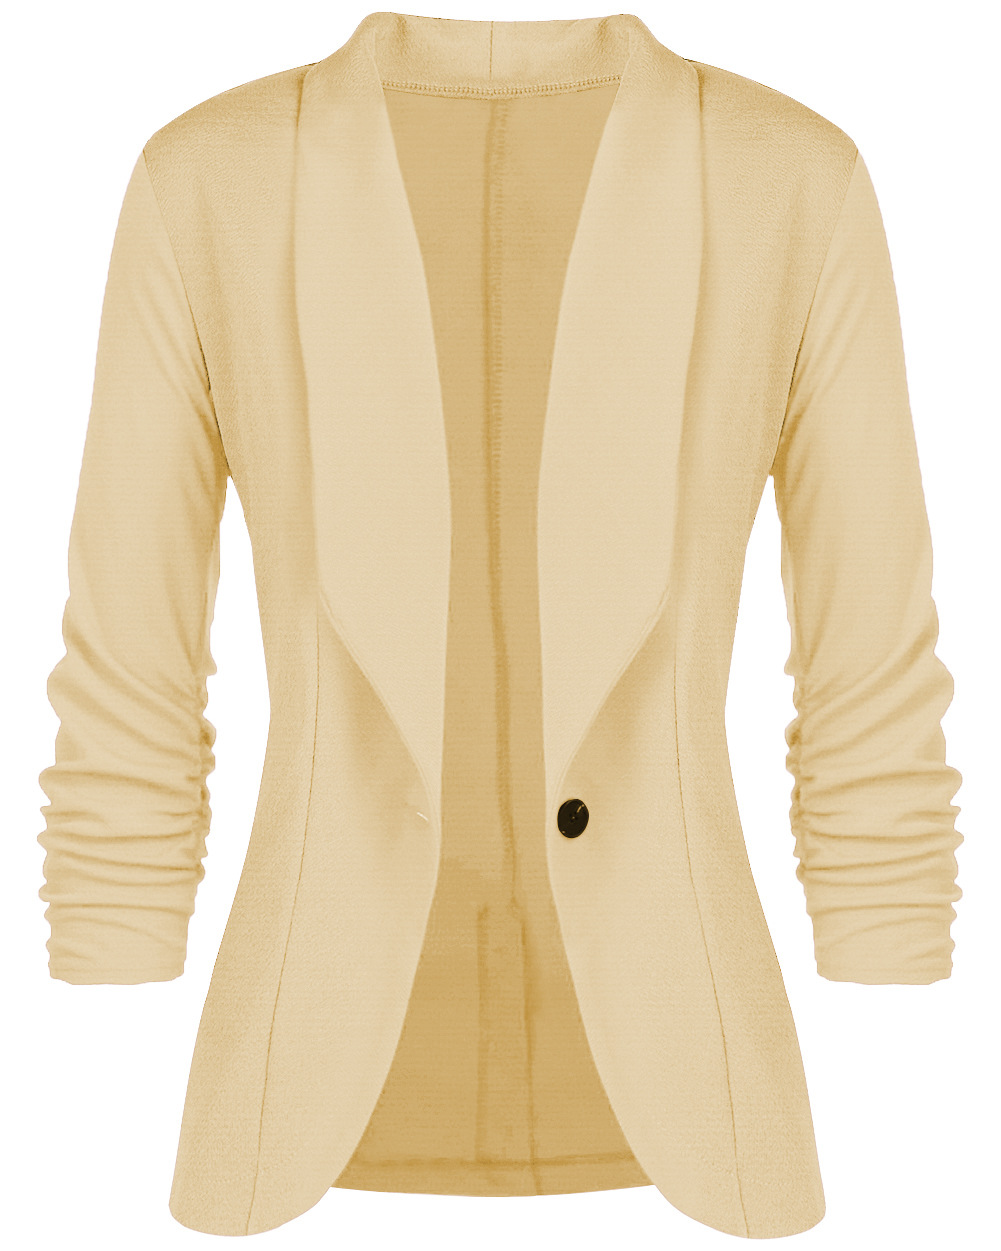  Women Slim Suit Coat 3/4 Sleeve One Button Casual Office Business Blazer Jacket Outwear pale yellow